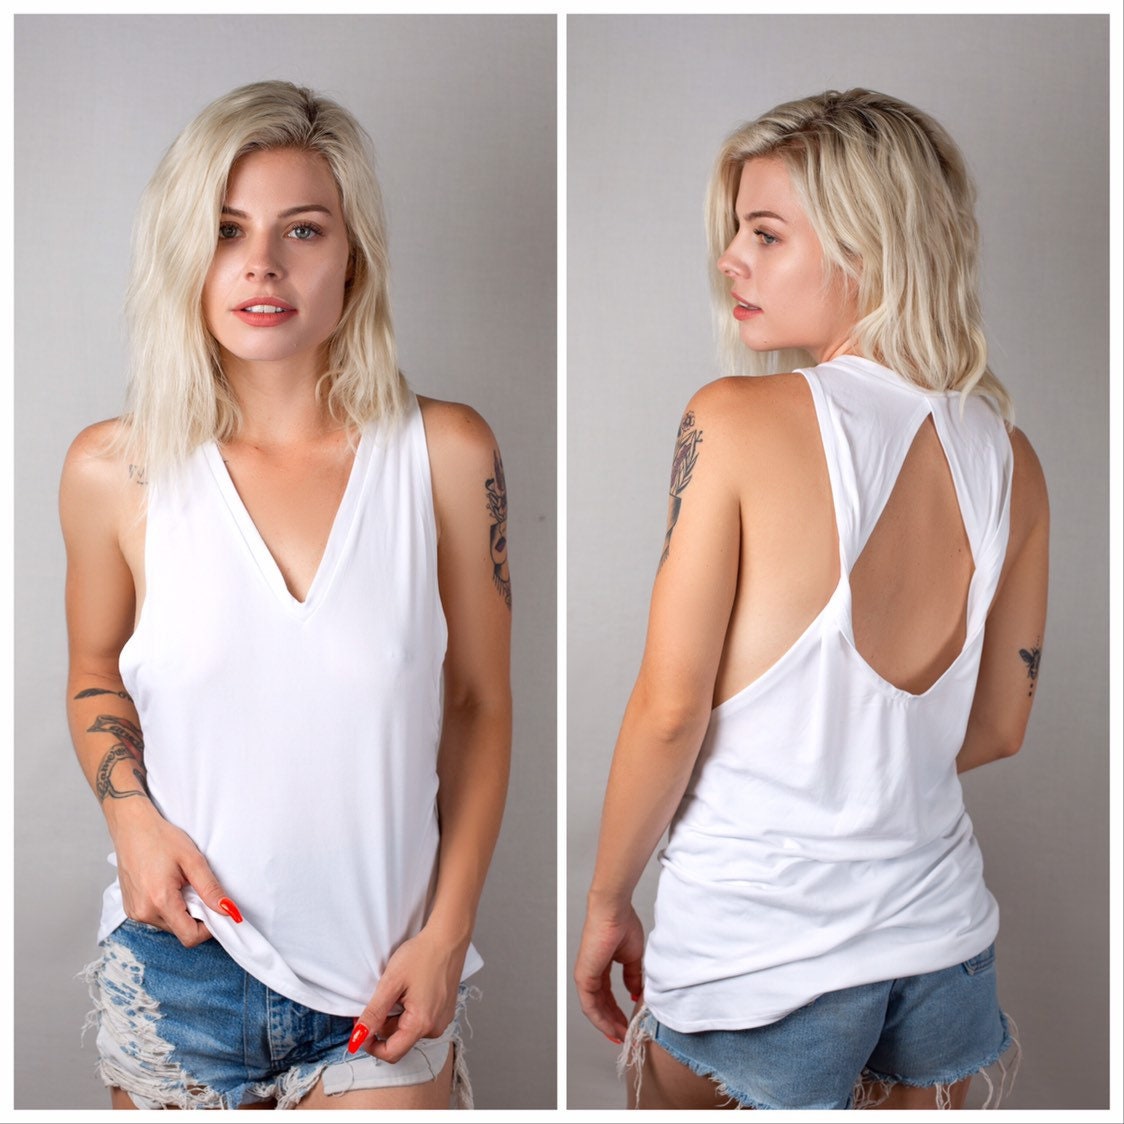 Shoulder Cut-Out Yoga Tank Top, Women's Sleeveless & Tank Tops